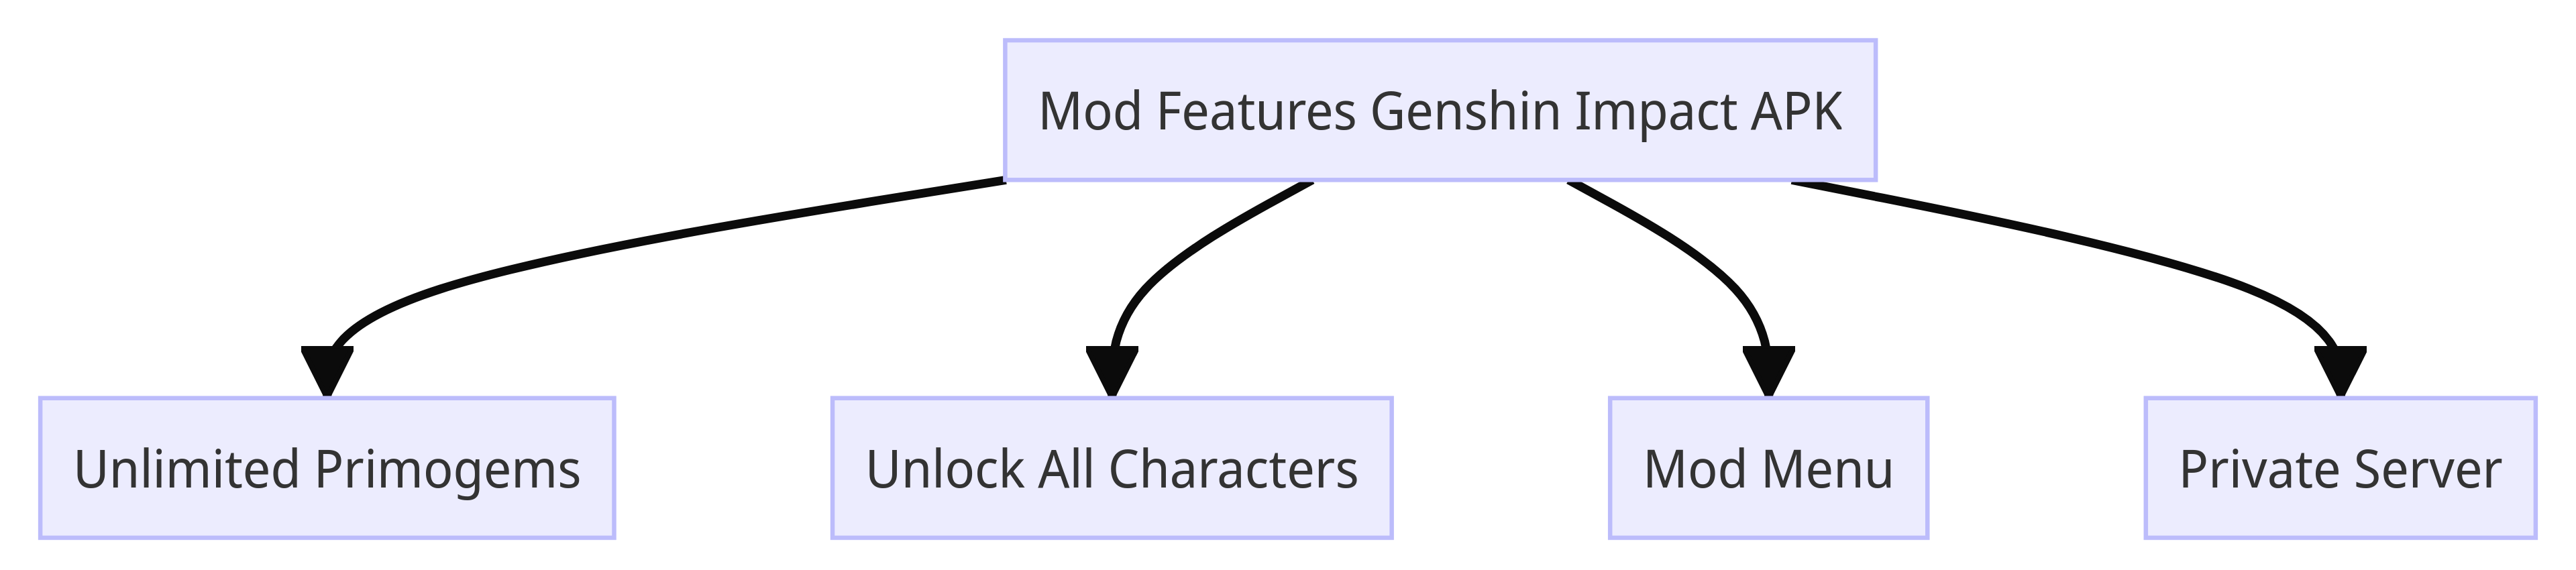 Mod Features Genshin Impact APK